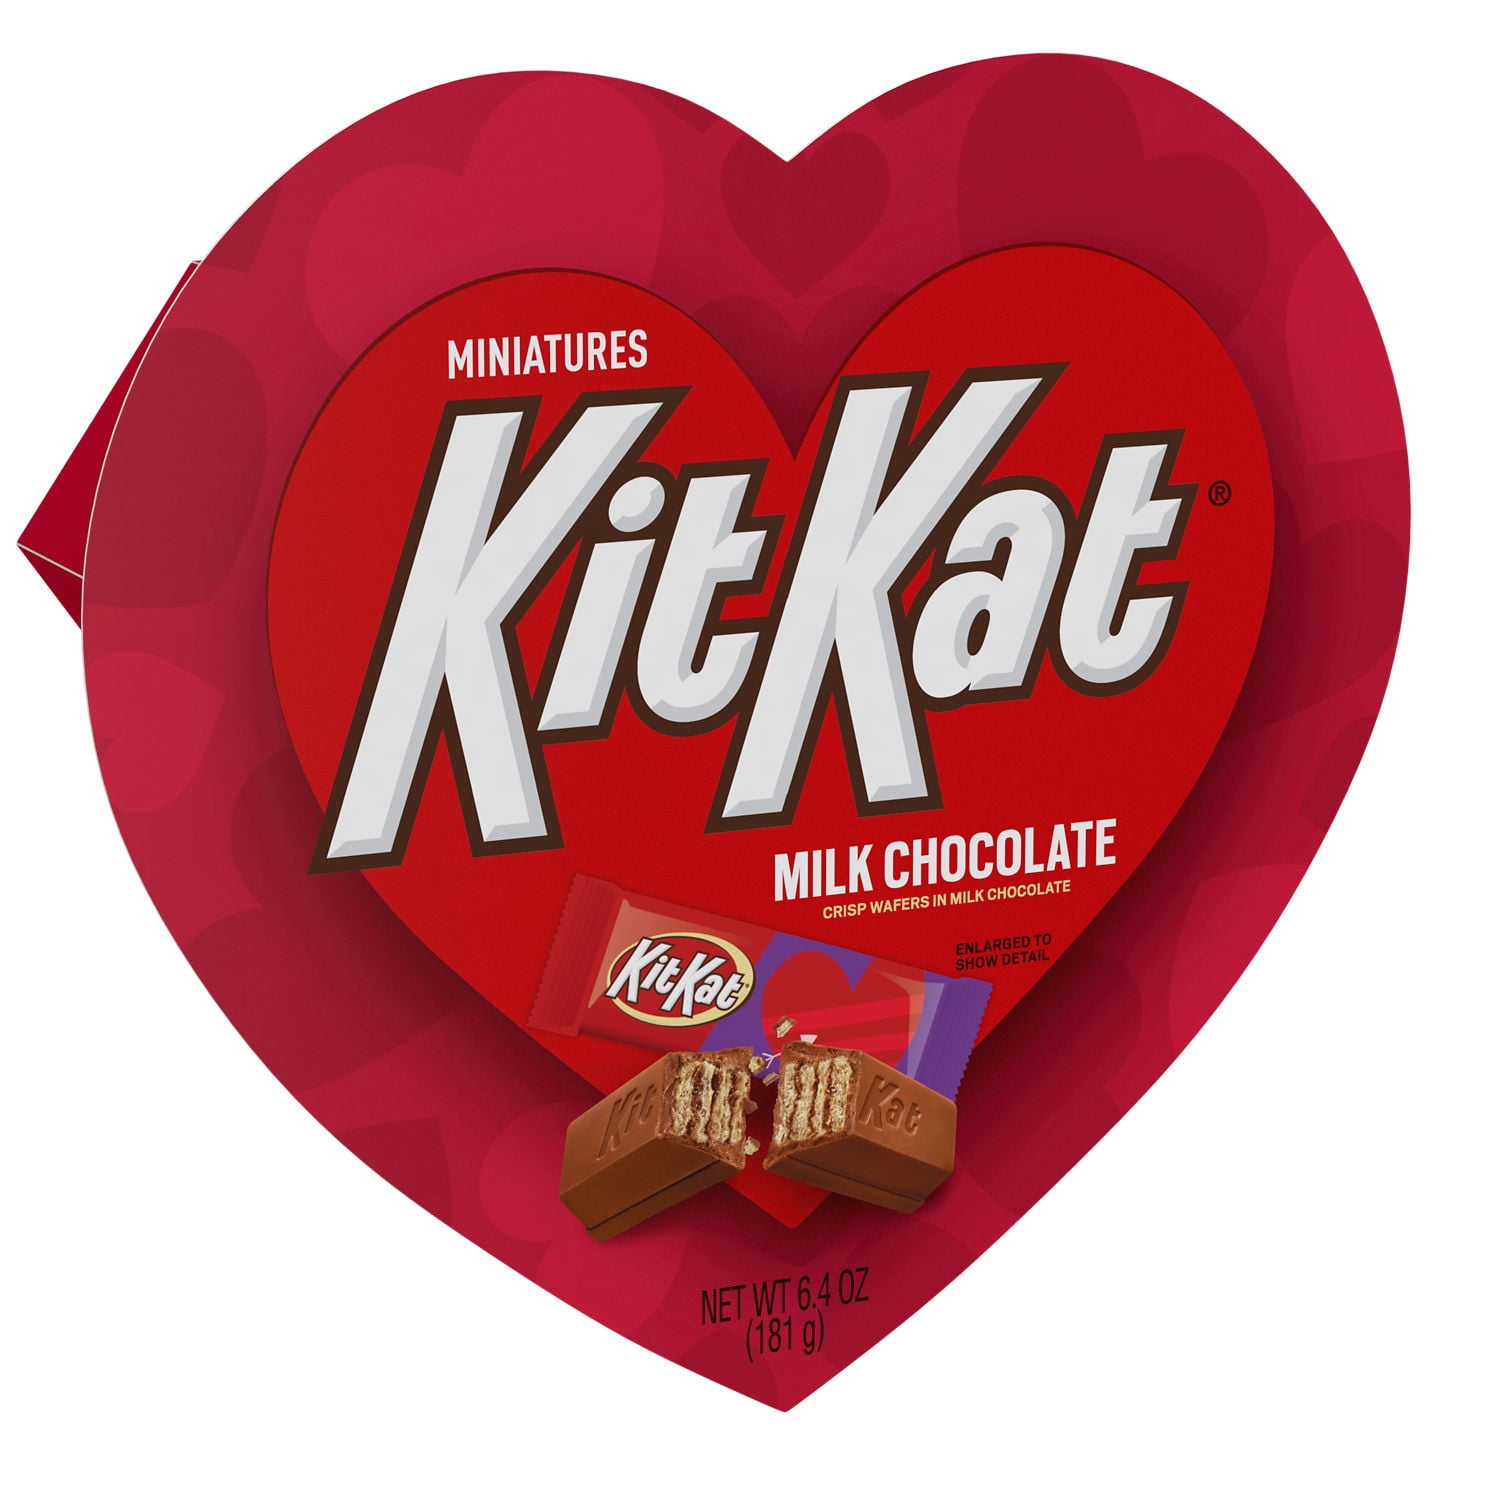 KITKAT KIT KAT®, Miniatures Milk Chocolate Wafer Candy Bars, Valentine's Day, 6.4 oz, Heart Gift Box